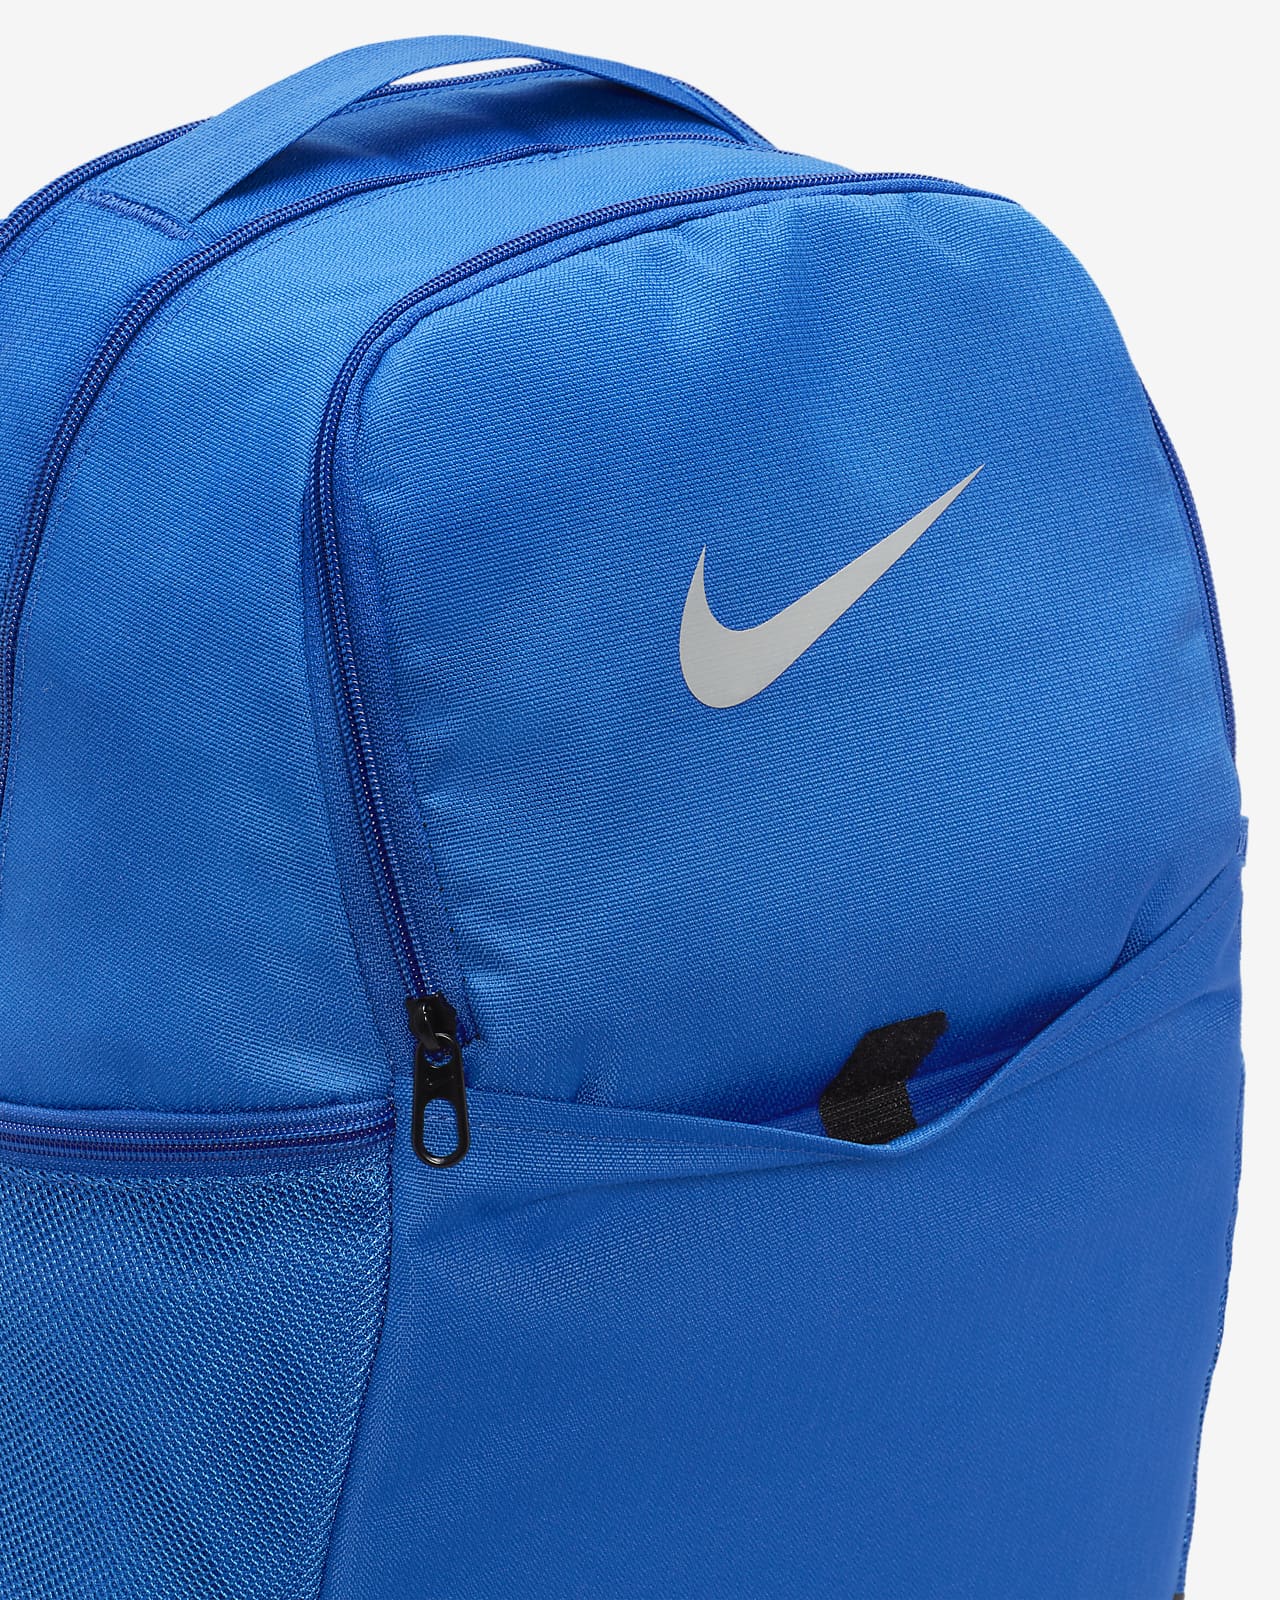 Nike Brasilia 9.5 Training Backpack (Medium, 24L). Nike CA